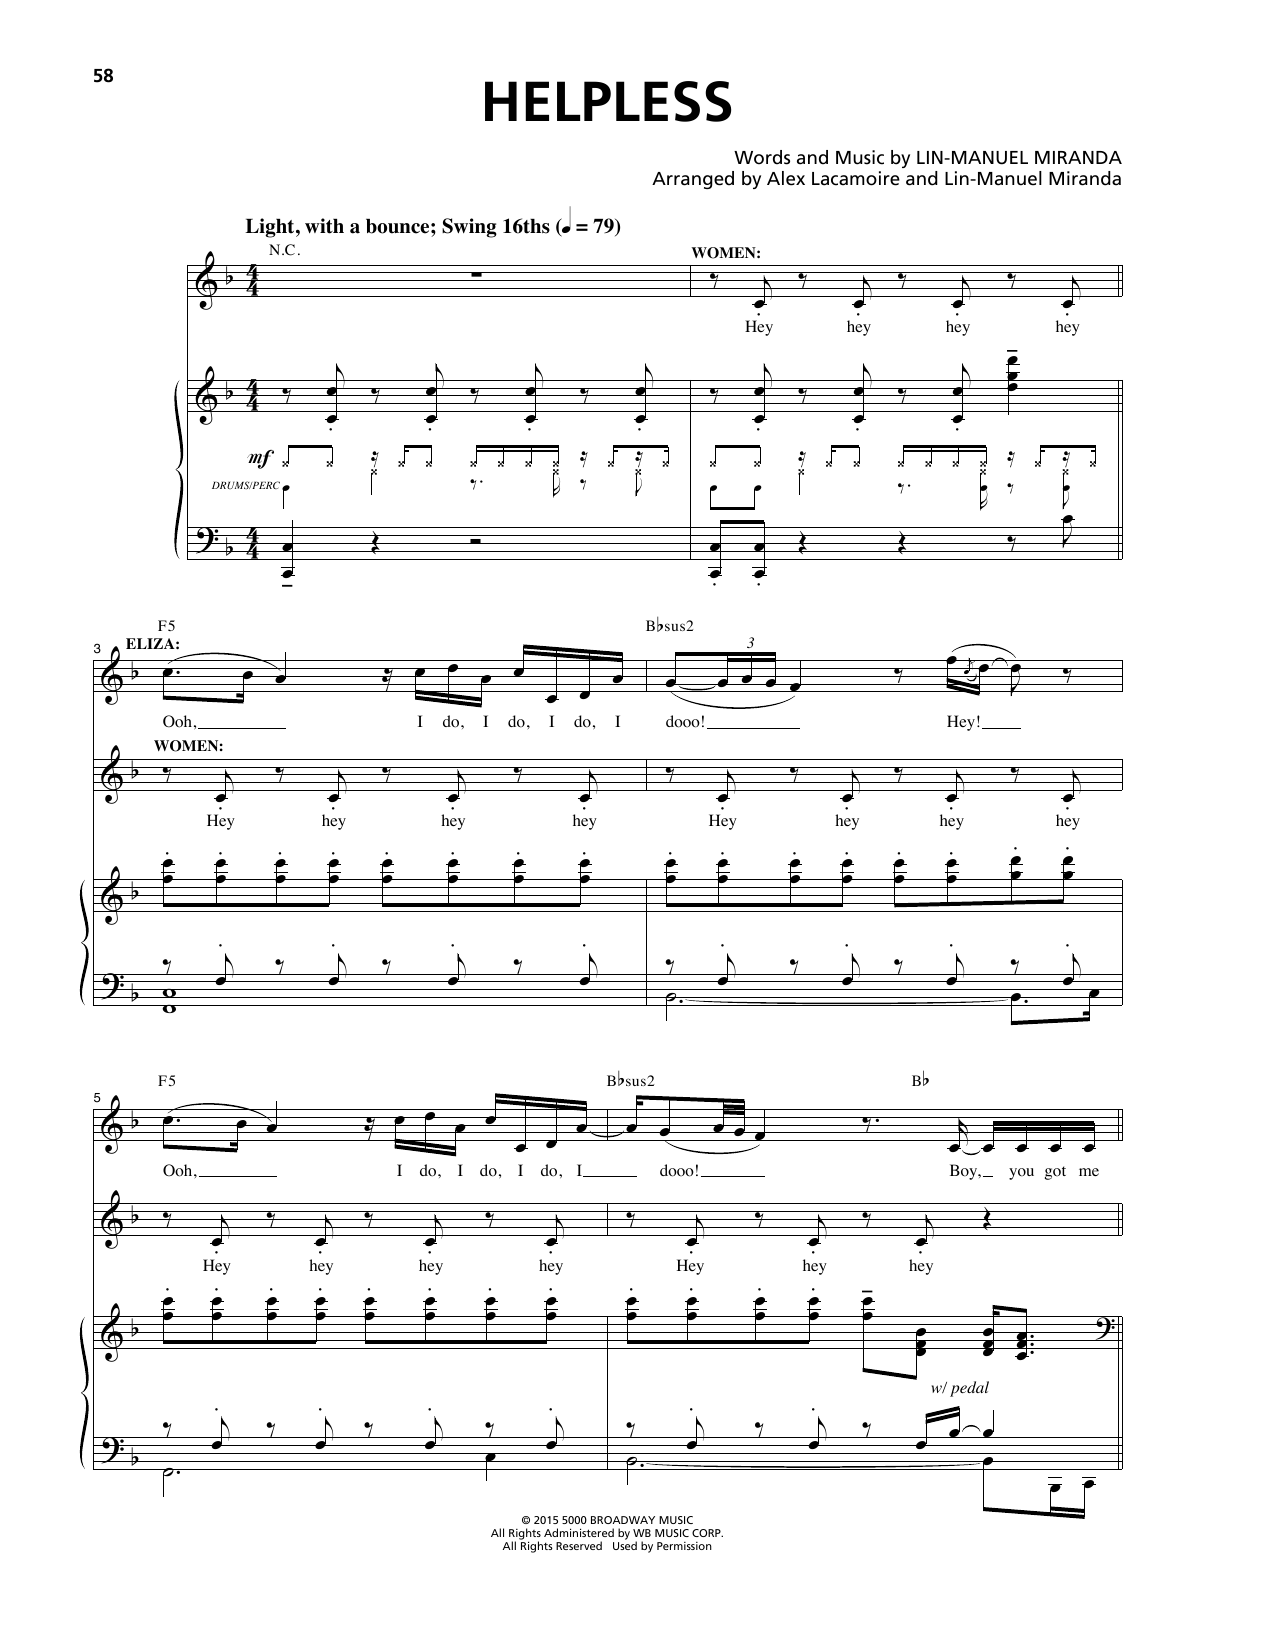 Lin-Manuel Miranda Helpless (from Hamilton) Sheet Music Notes & Chords for Violin Solo - Download or Print PDF